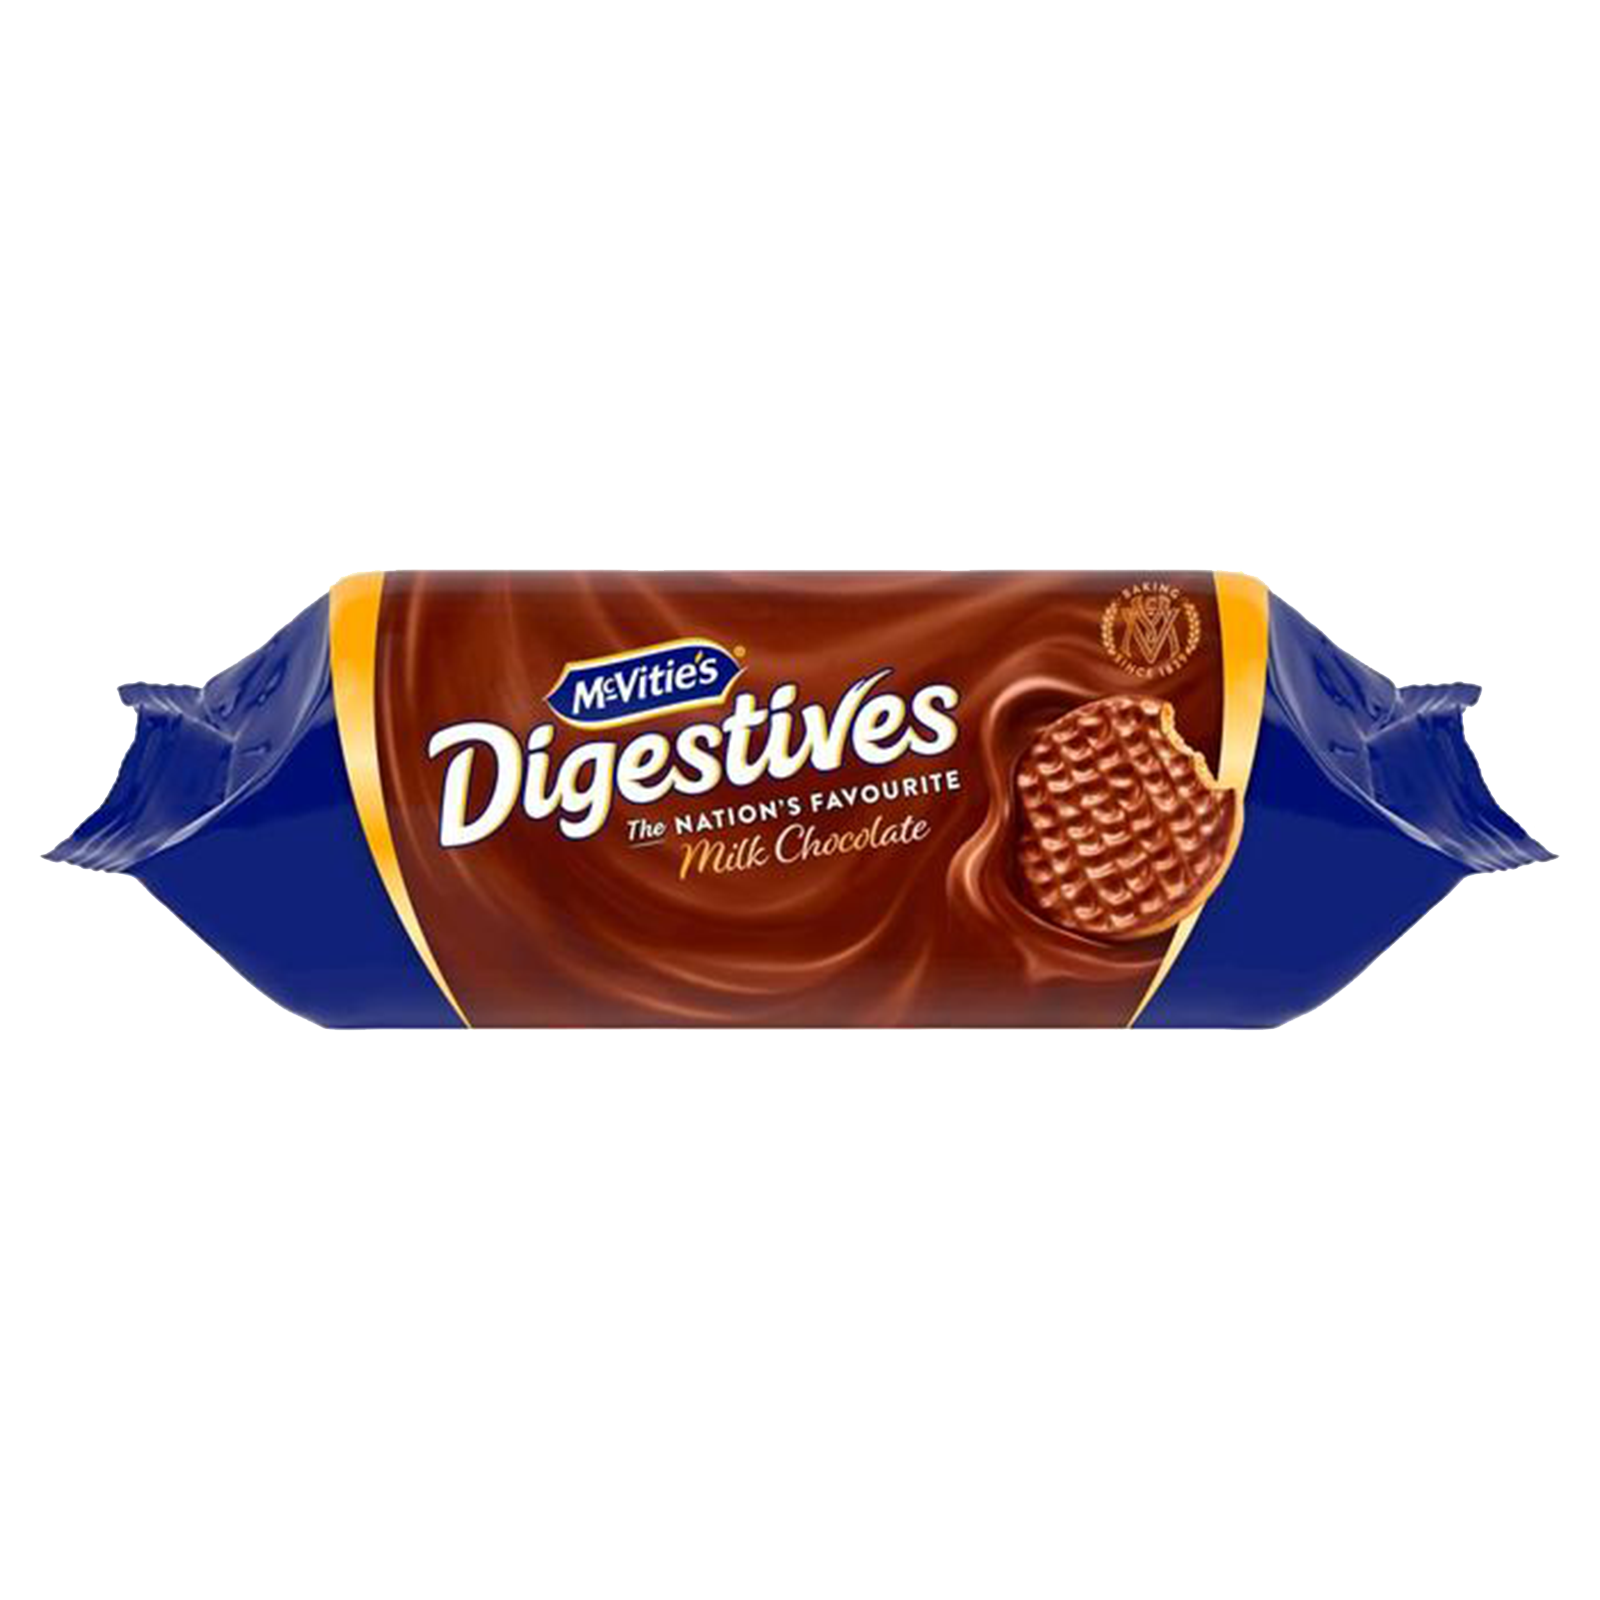 McVitie's £1.75 Digestives Milk Chocolate, 266g